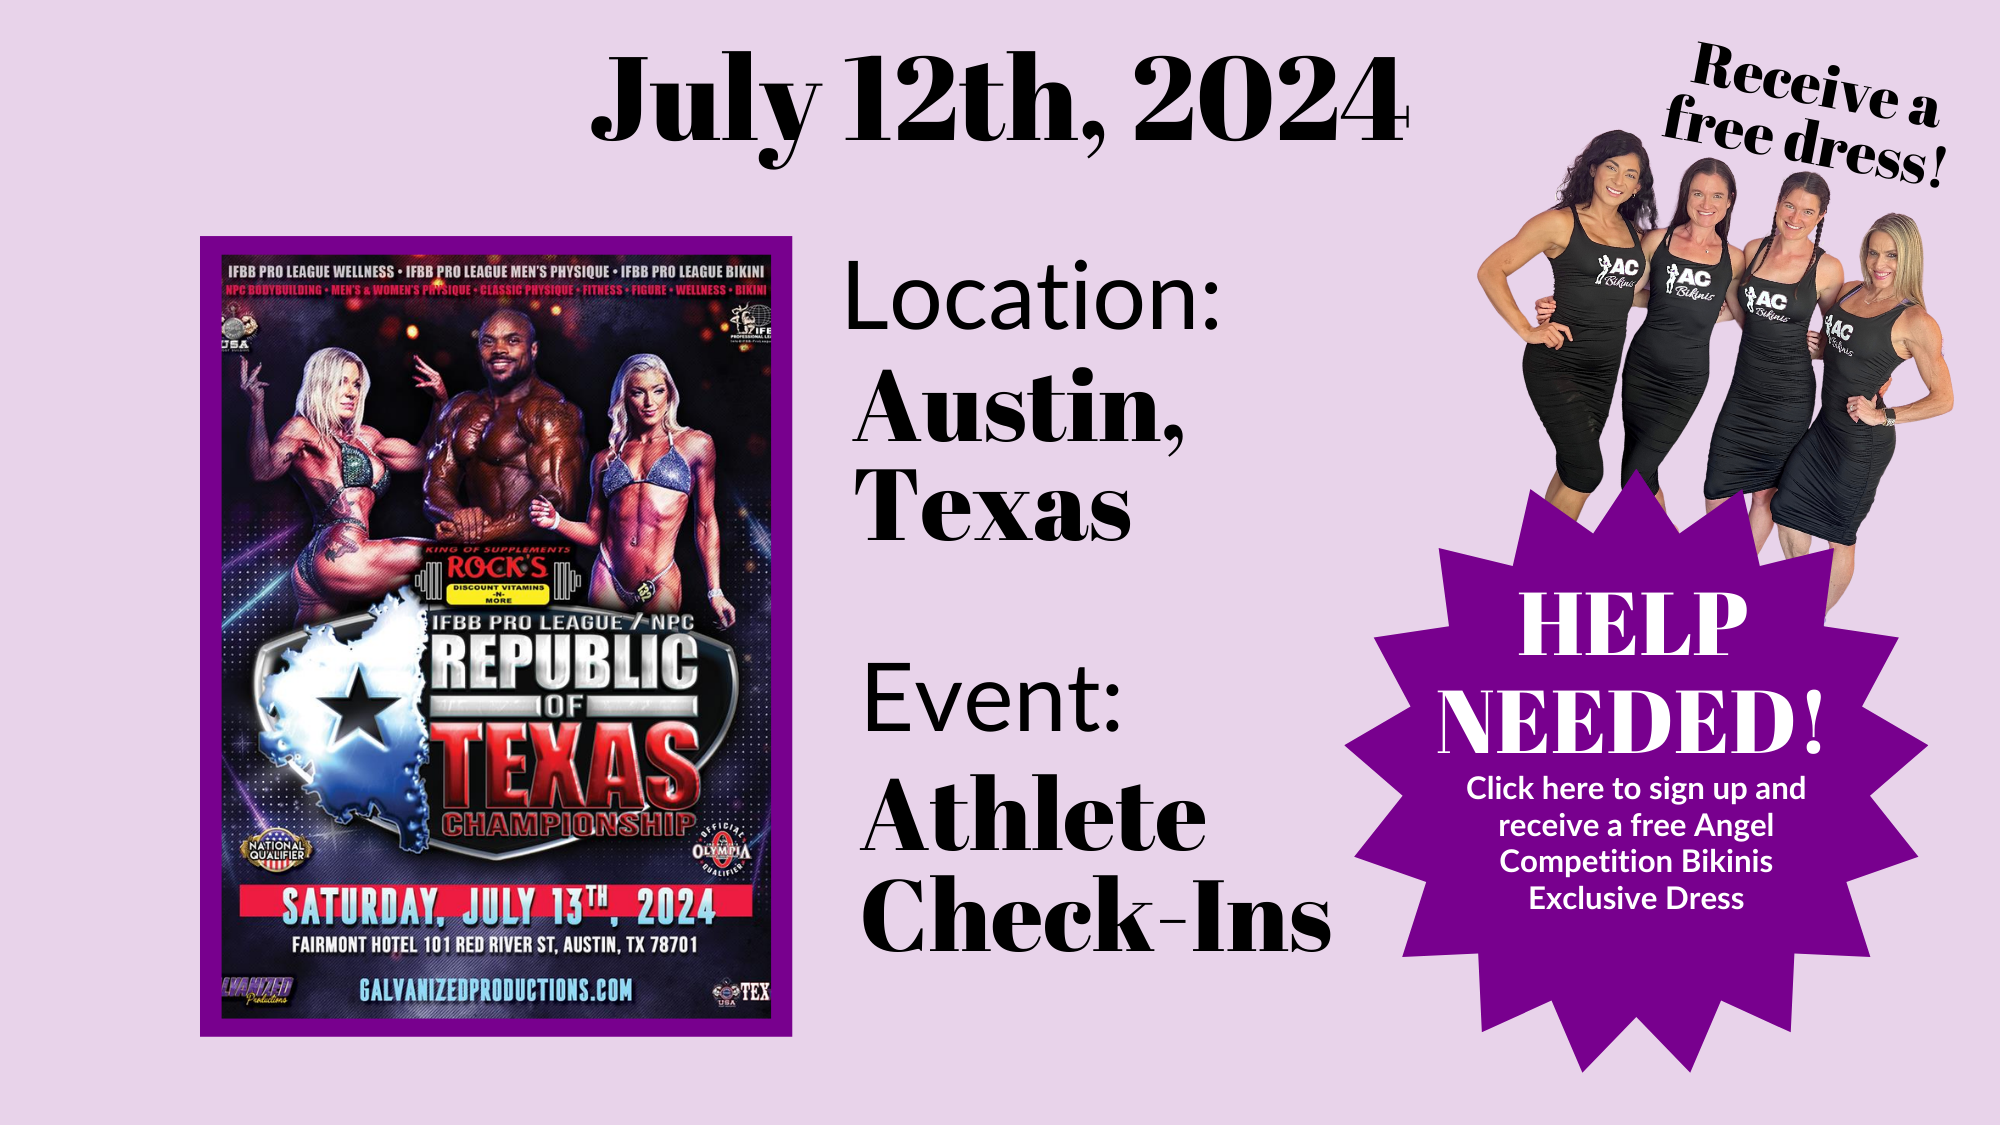 npc texas galvanized productions schedule, republic of texas npc show, Texas bodybuilding, texas competition suits